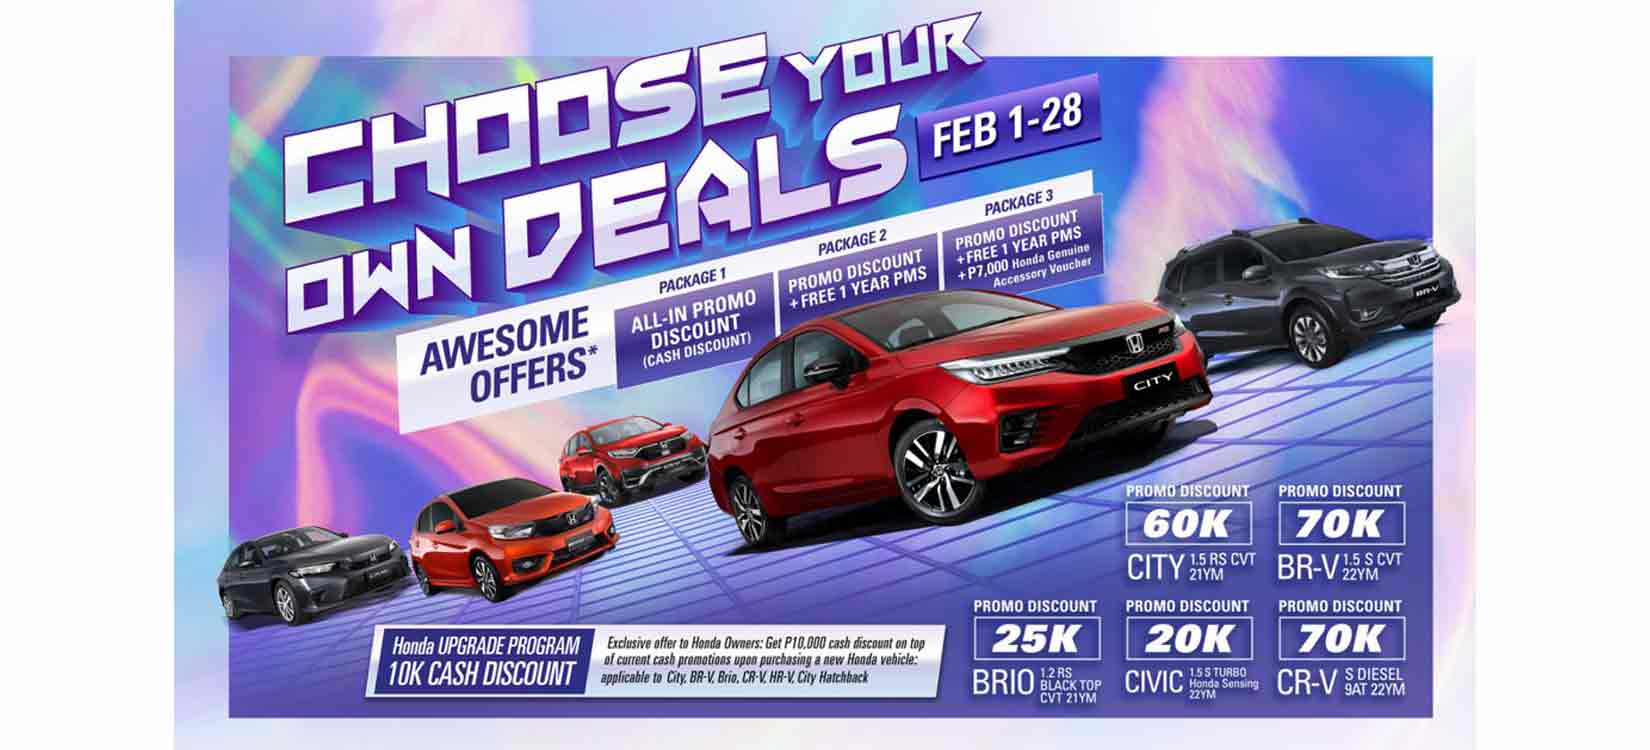 Grab Hondaâ€™s special deals on All-New Civic S Turbo Honda SENSING and BR-V; â€œChoose Your Own Dealsâ€ promo extended this February